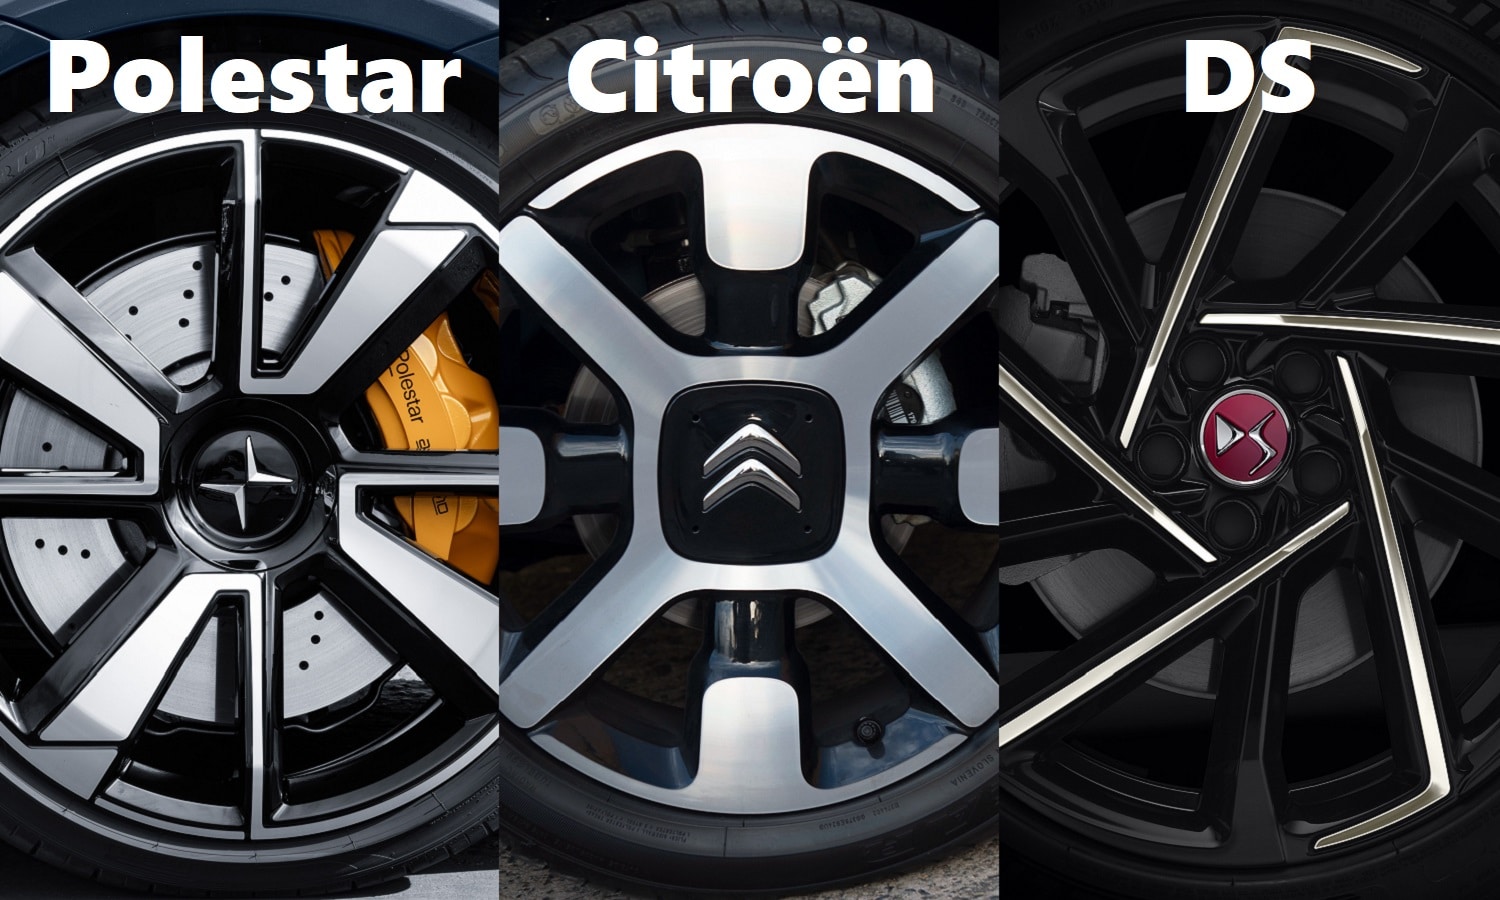 Polestar, Citroen and DS logos